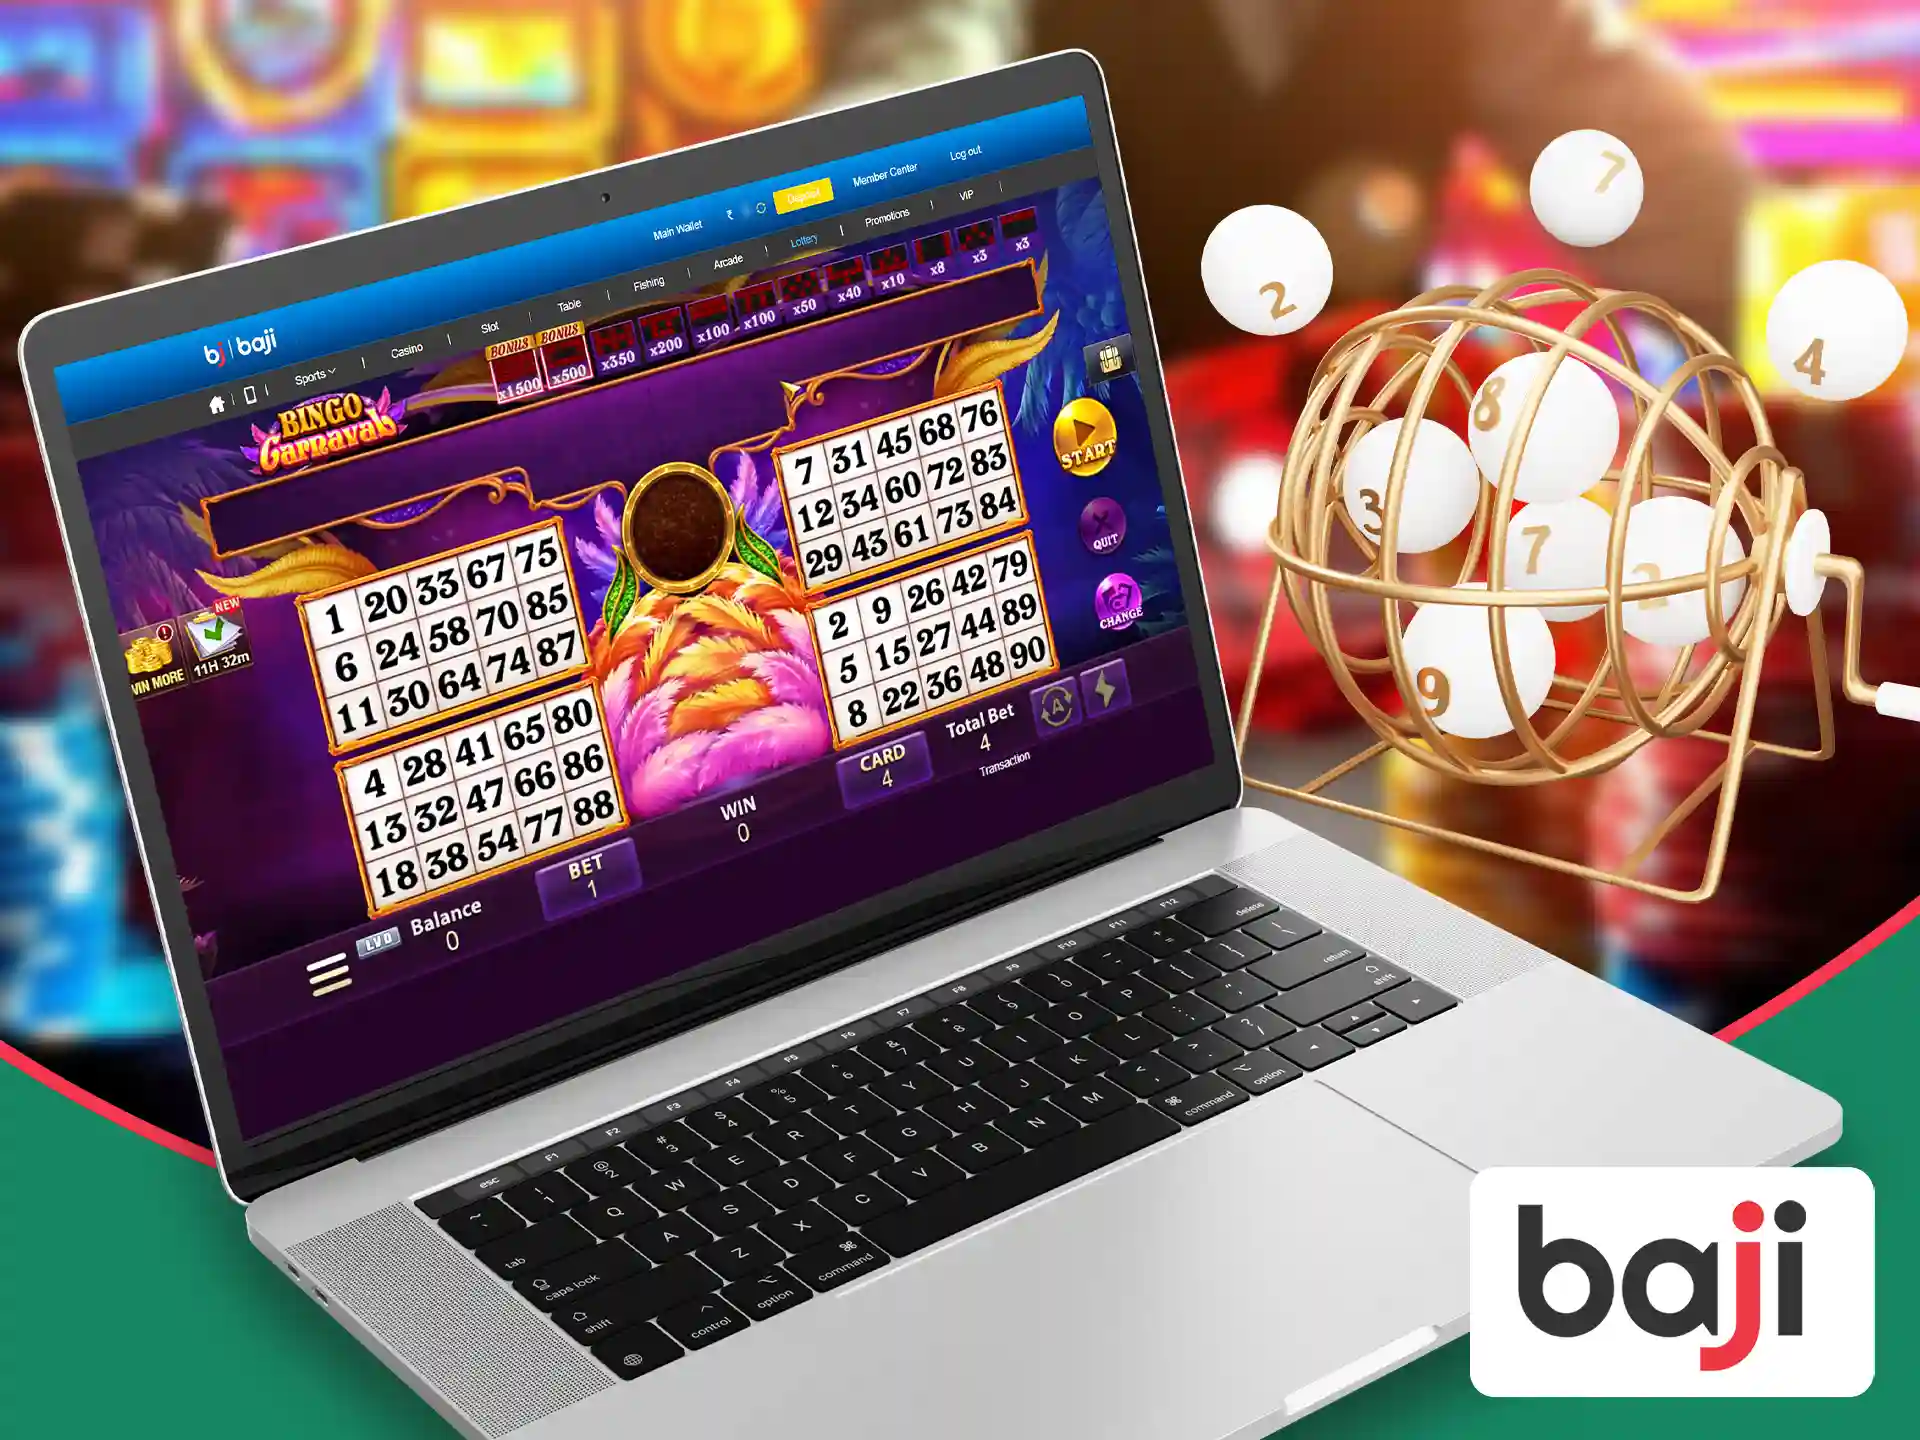 You can play Baji Bet lotteries in demo mode using your virtual balance.